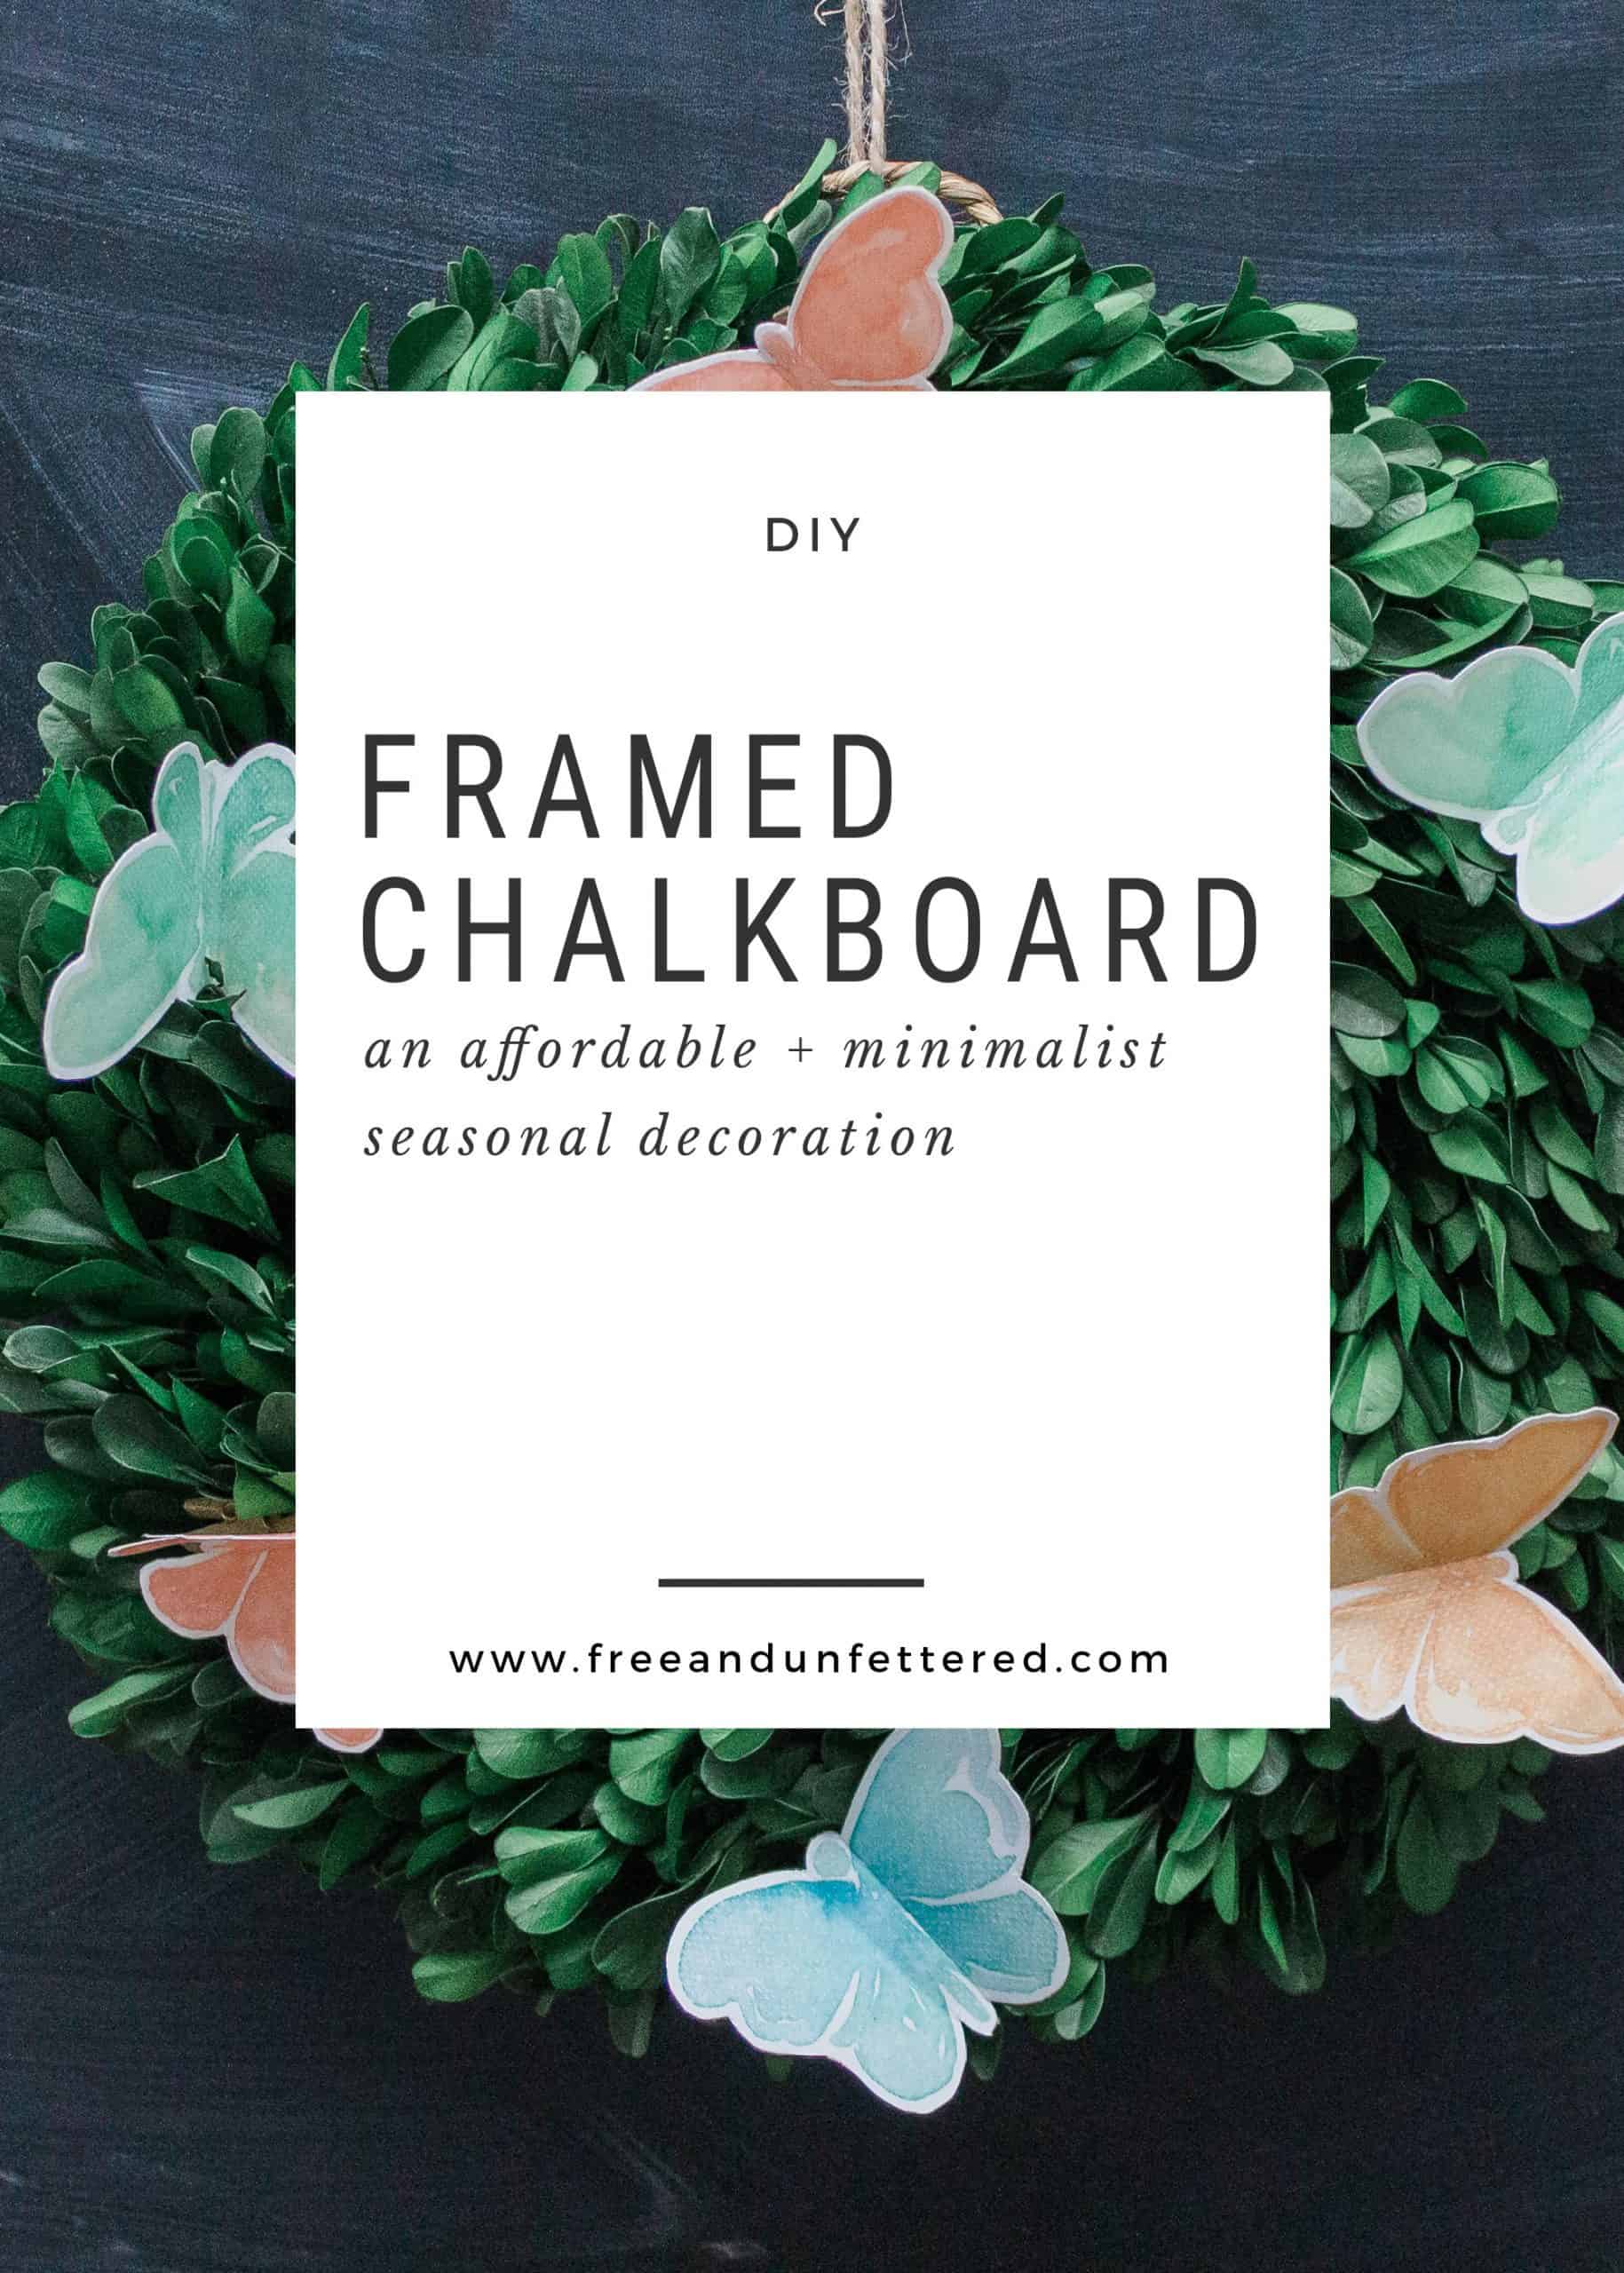 DIY: Framed Chalkboard